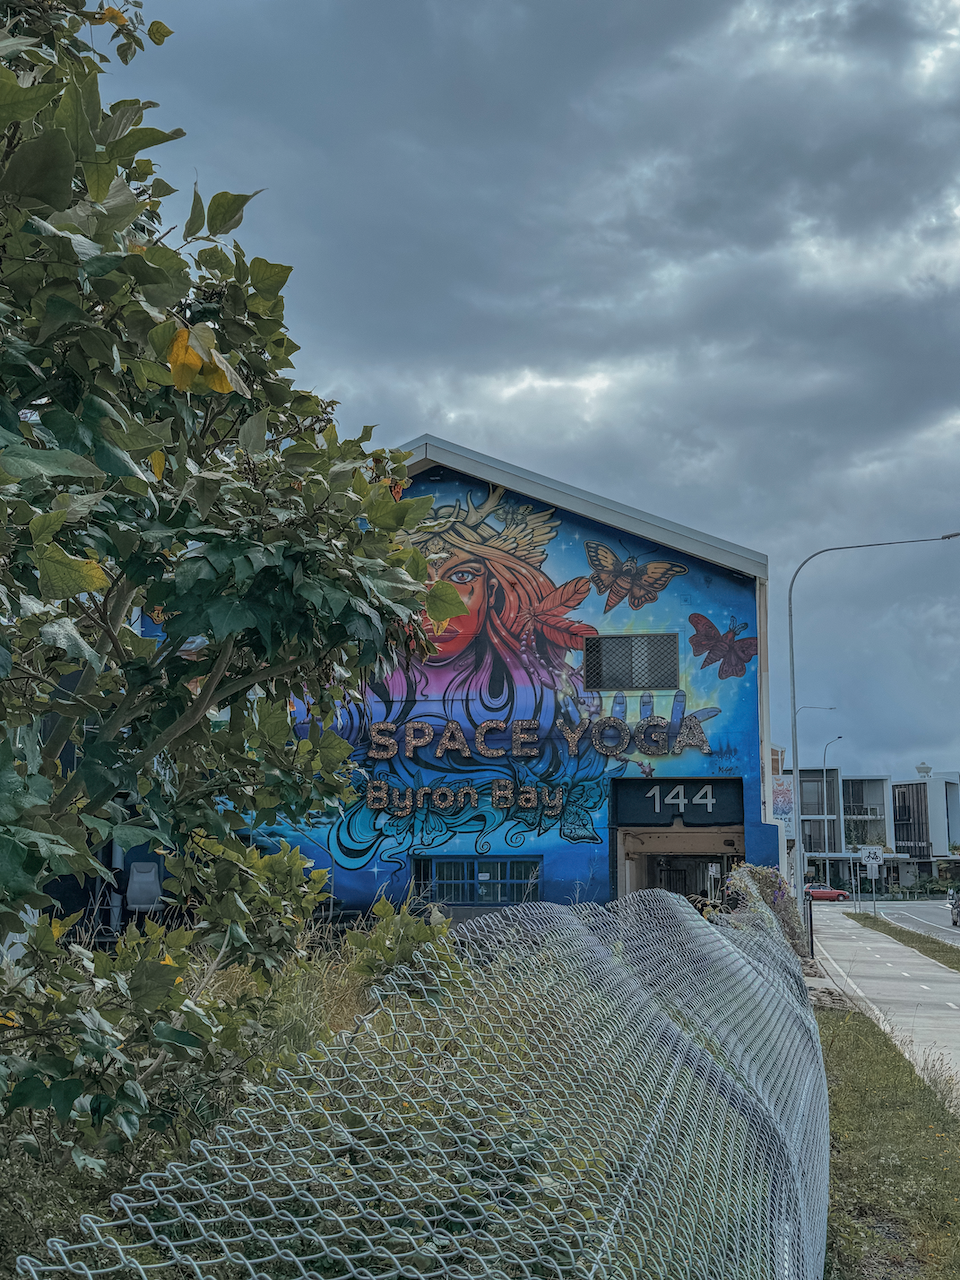 Space yoga graffiti - Byron Bay - New South Wales - Australia